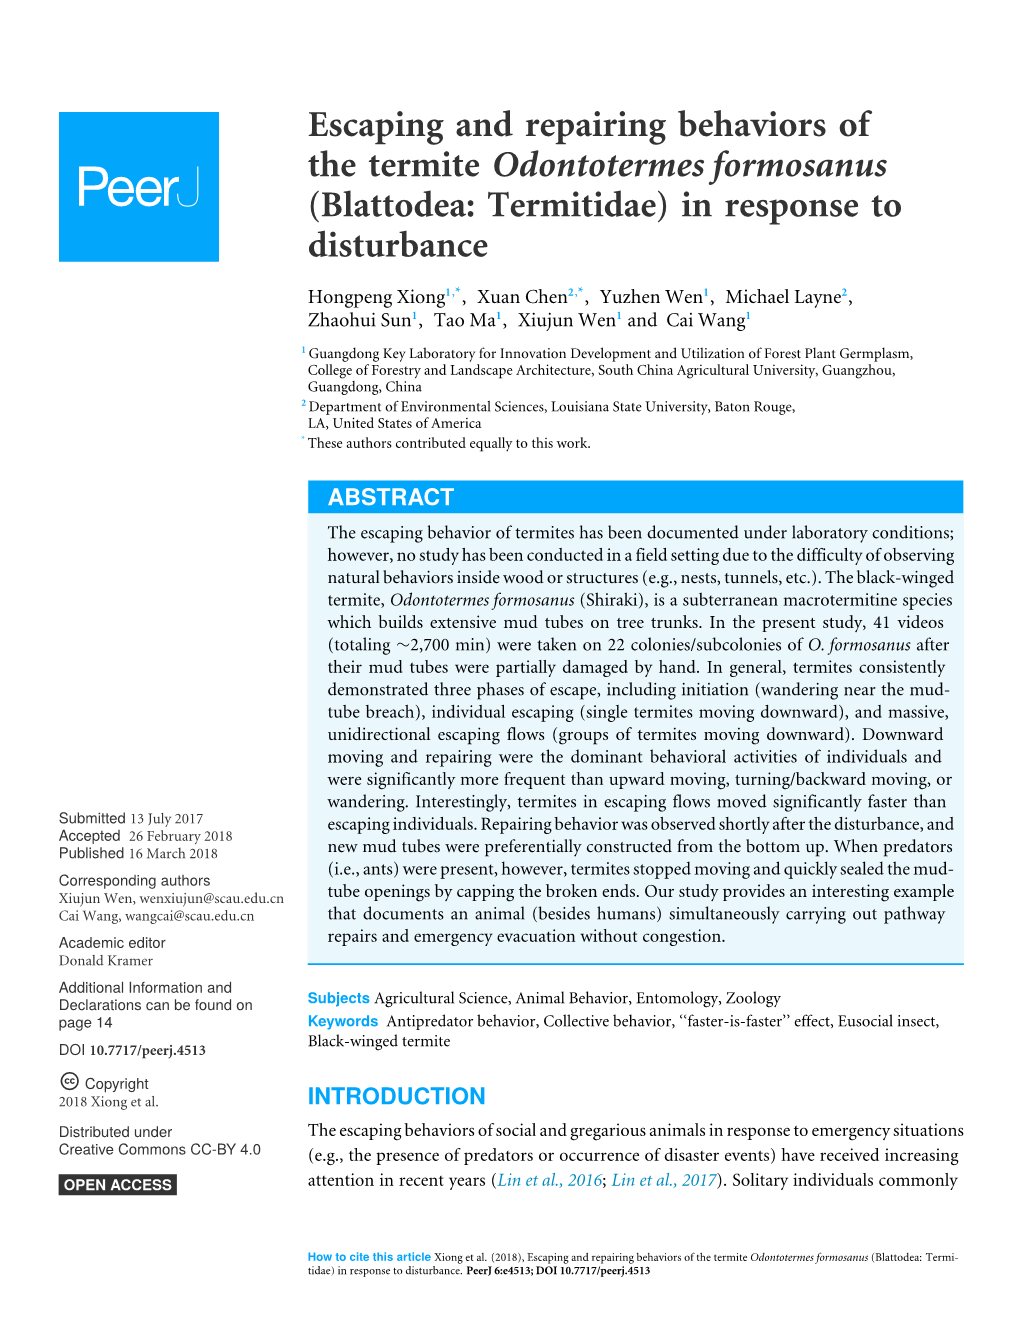 Escaping and Repairing Behaviors of the Termite Odontotermes Formosanus (Blattodea: Termitidae) in Response to Disturbance